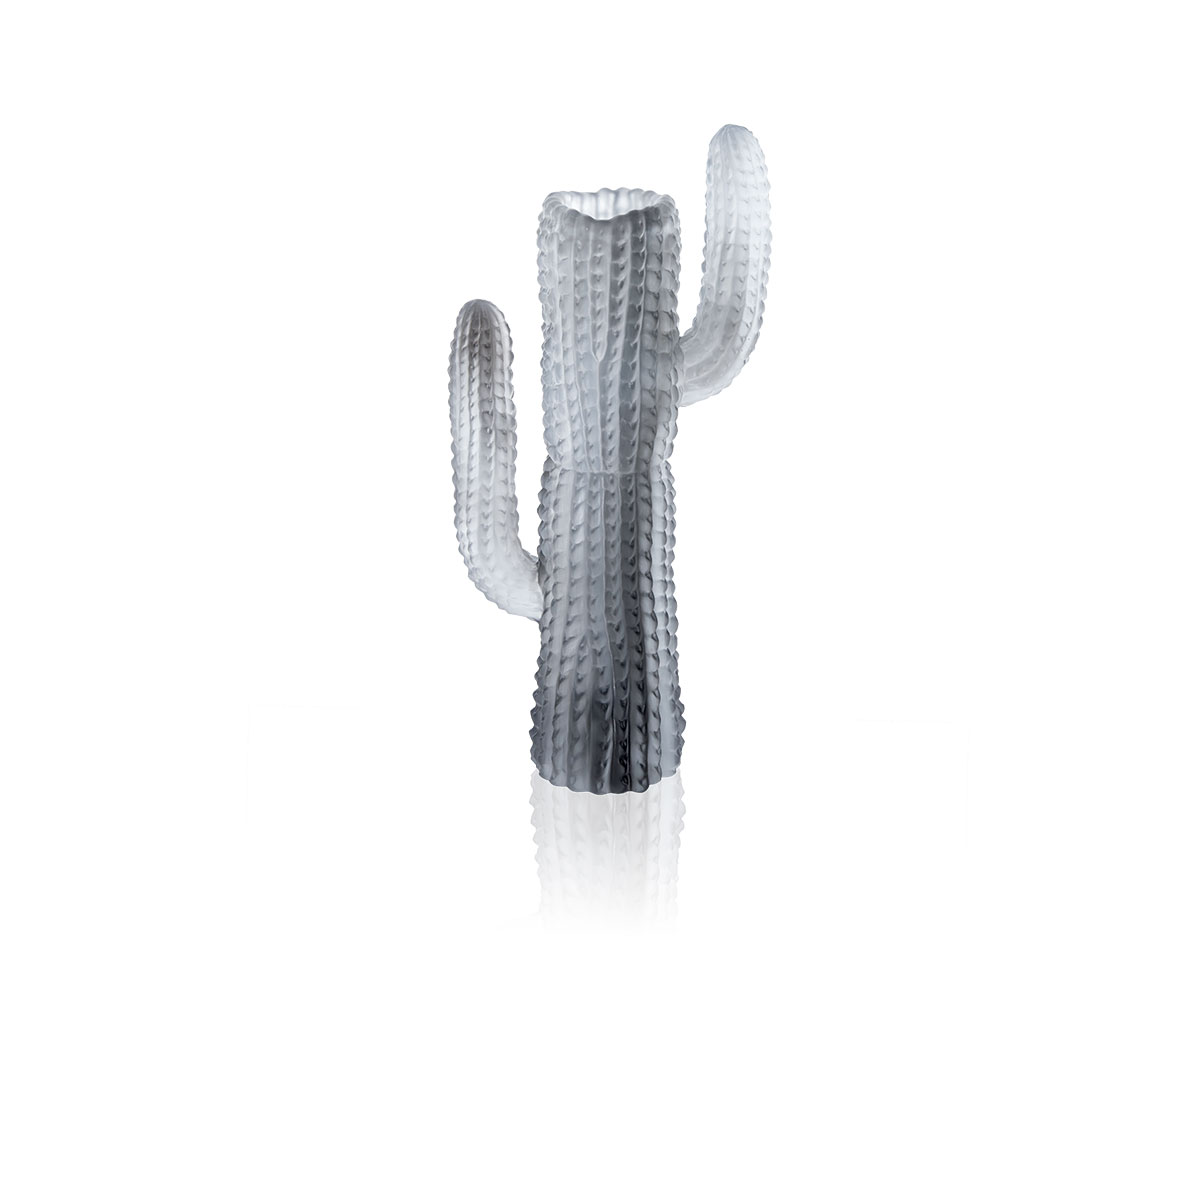 Daum Jardin de Cactus Grey Vase by Emilio Robba